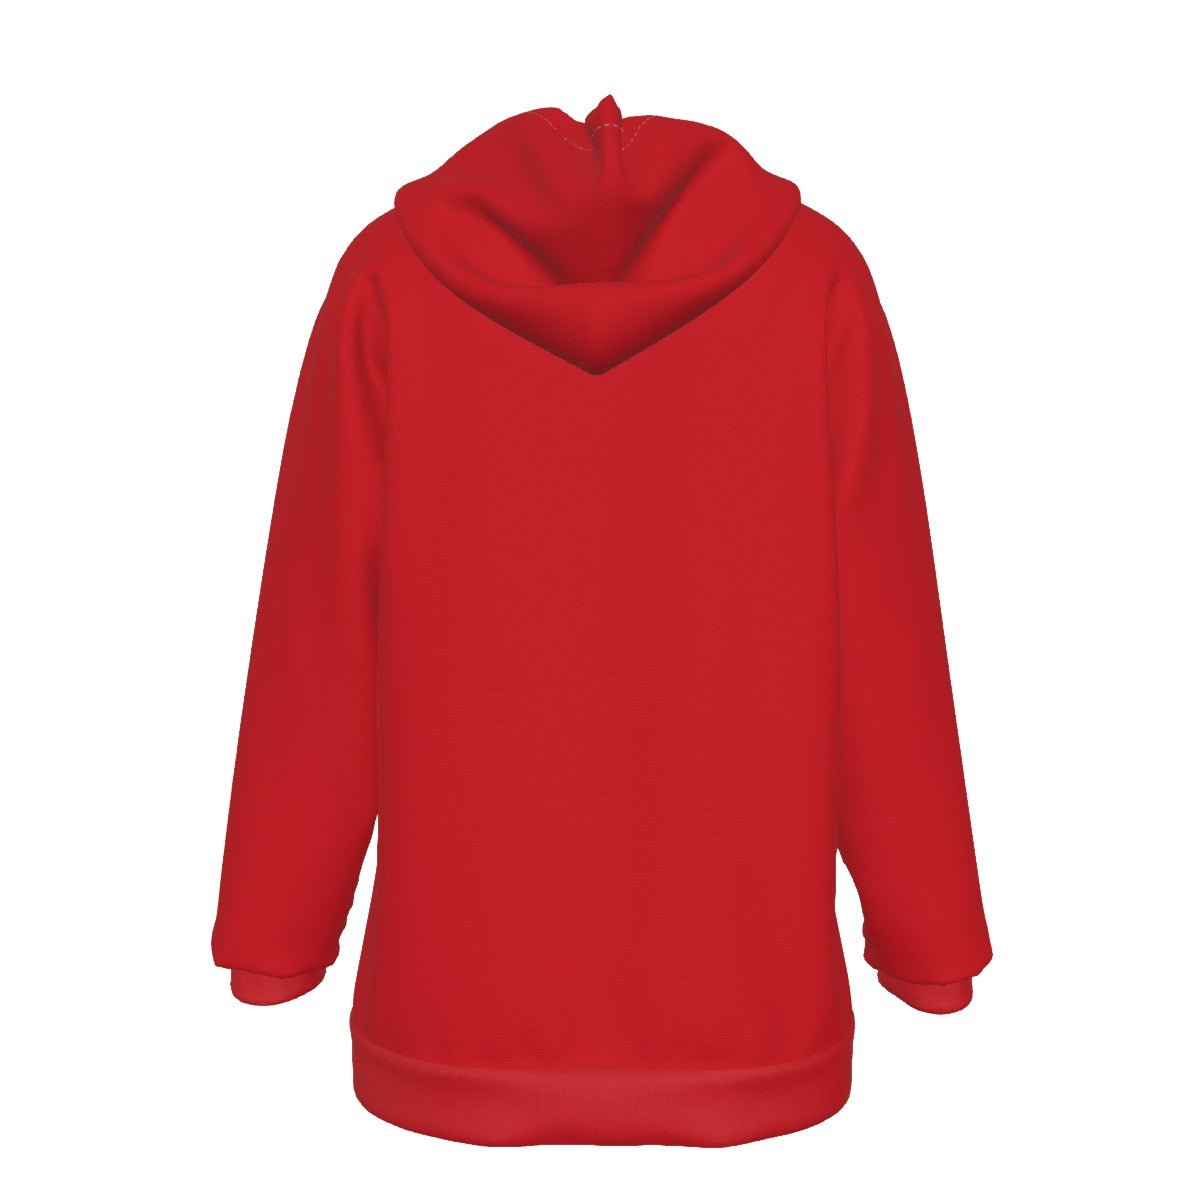 Women's Fleece Christmas Hoodie - Merry Christmas - Red - Festive Style